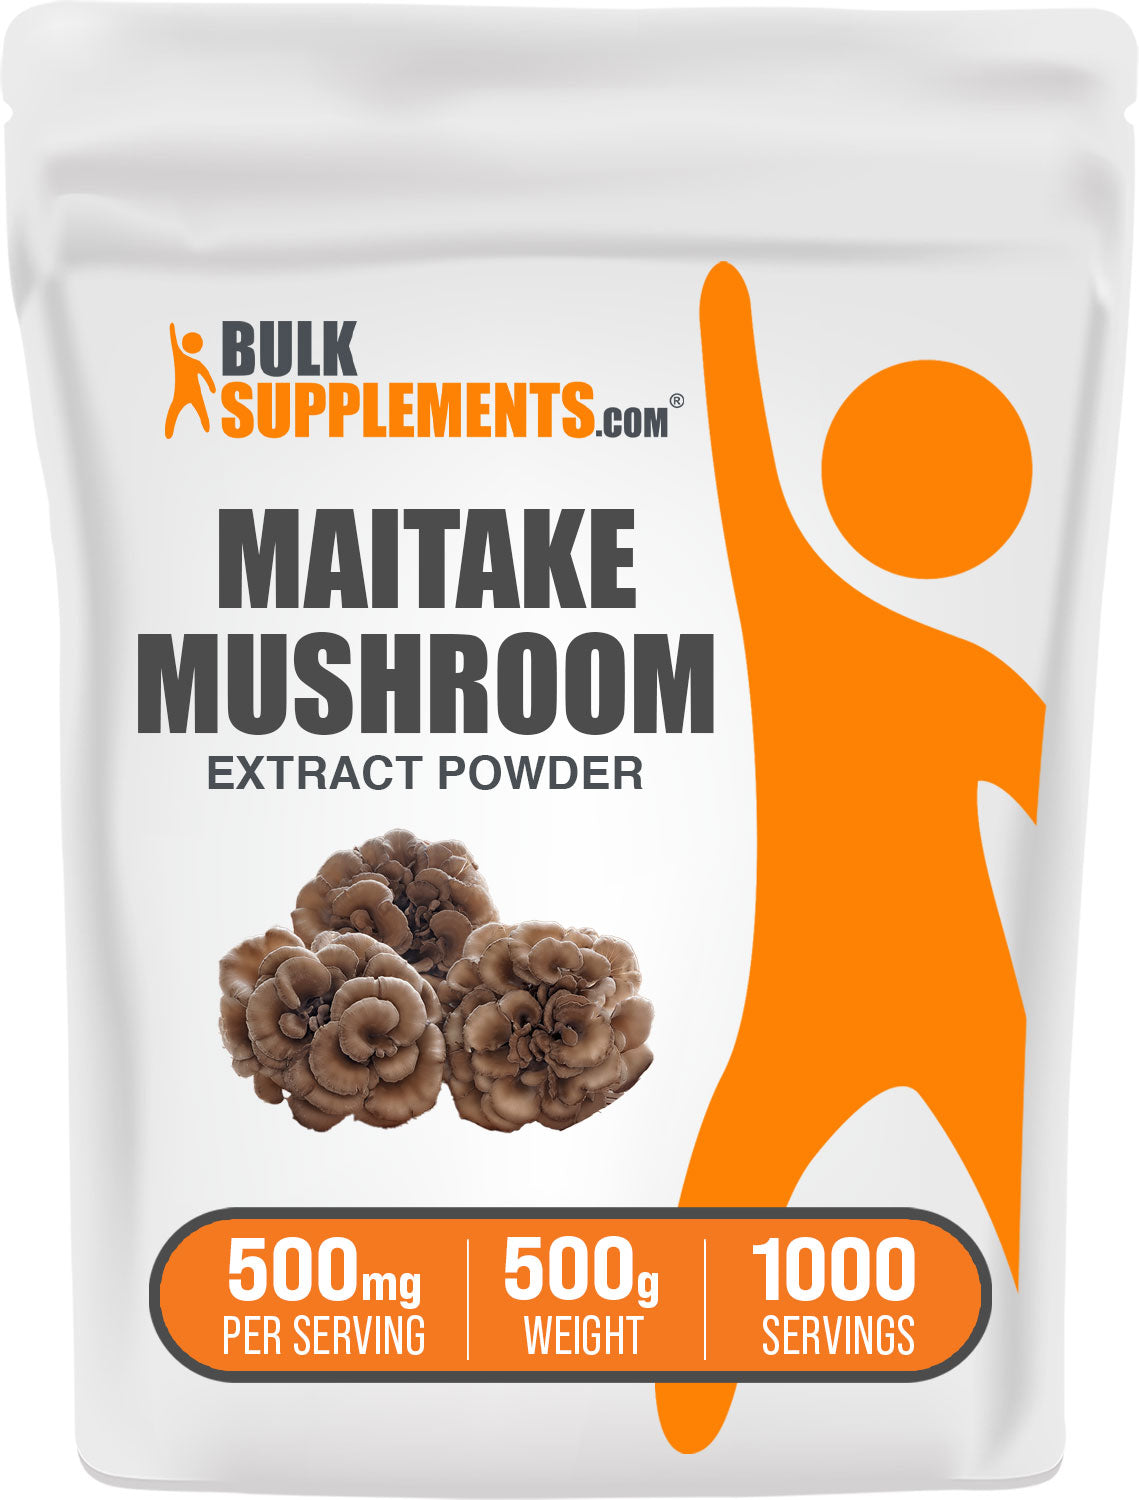 Maitake Mushroom Extract Powder 500g Bag